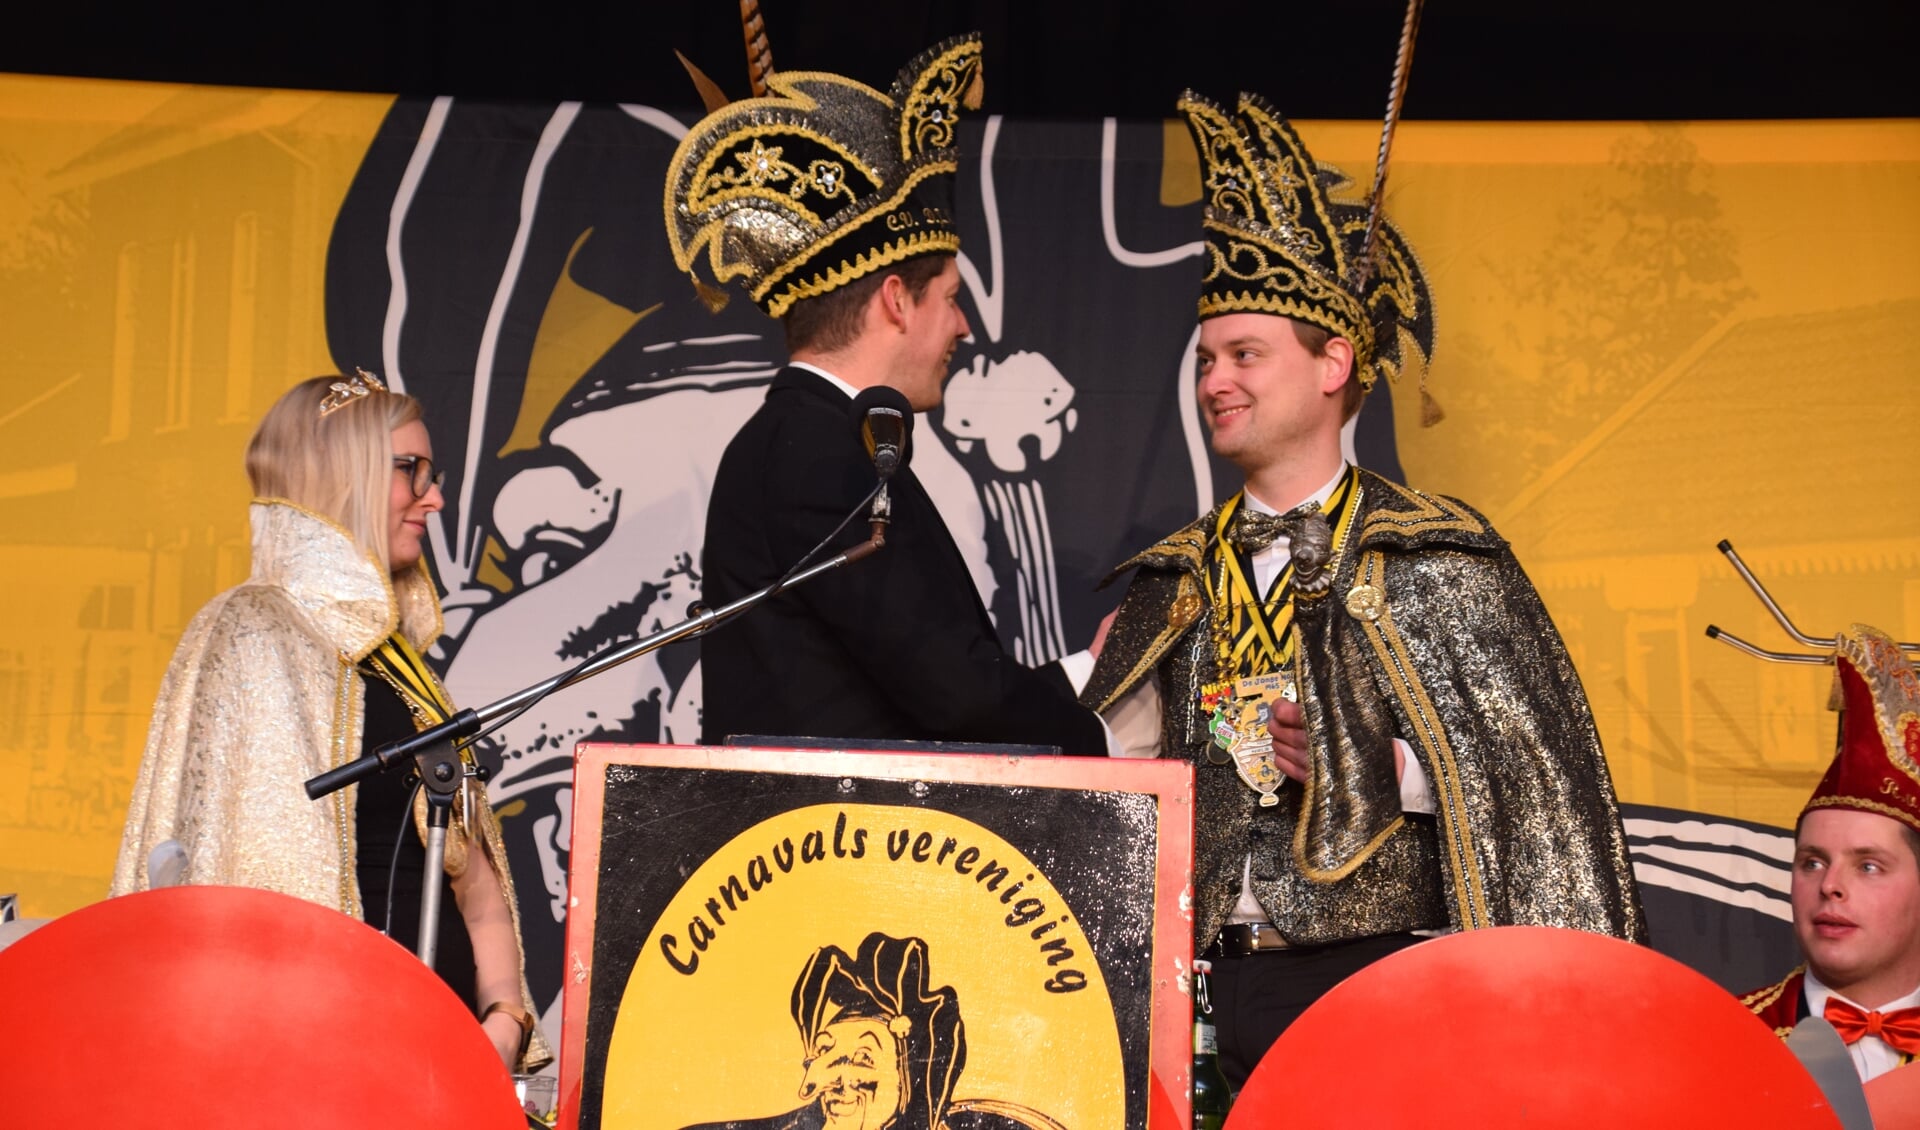 De sinds 2020 regerende Prins Niels 1 zal aftreden bij de Jonge Nölepeters. Foto: De Jonge Nölepeters